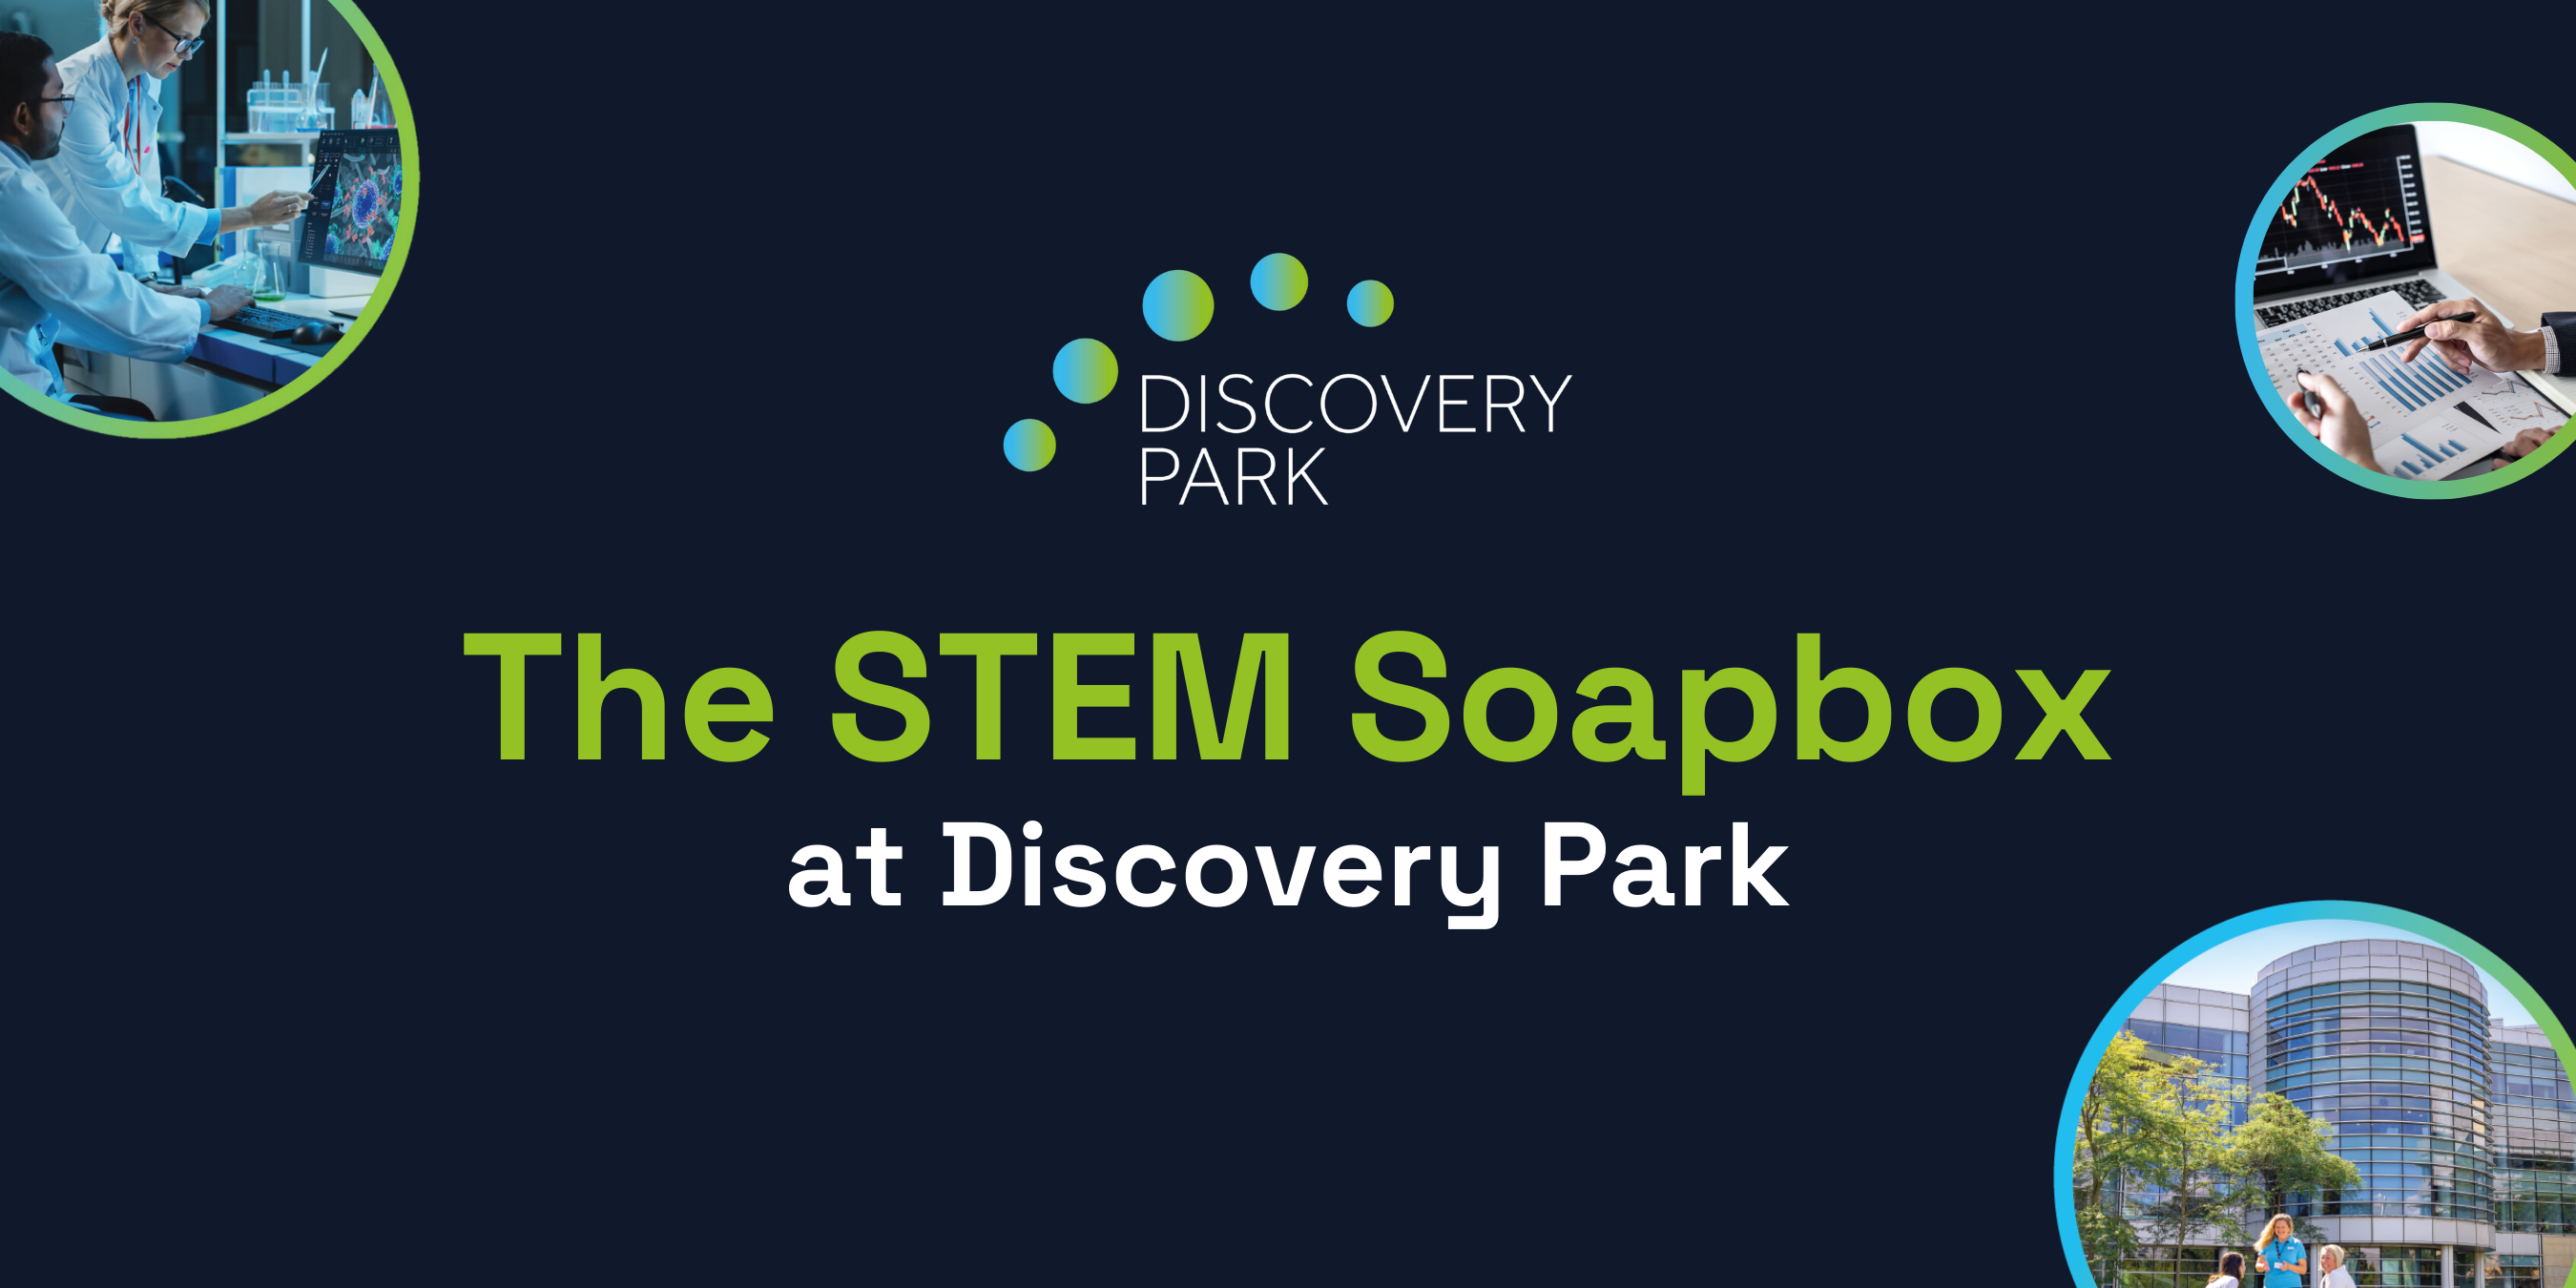 The STEM Soapbox